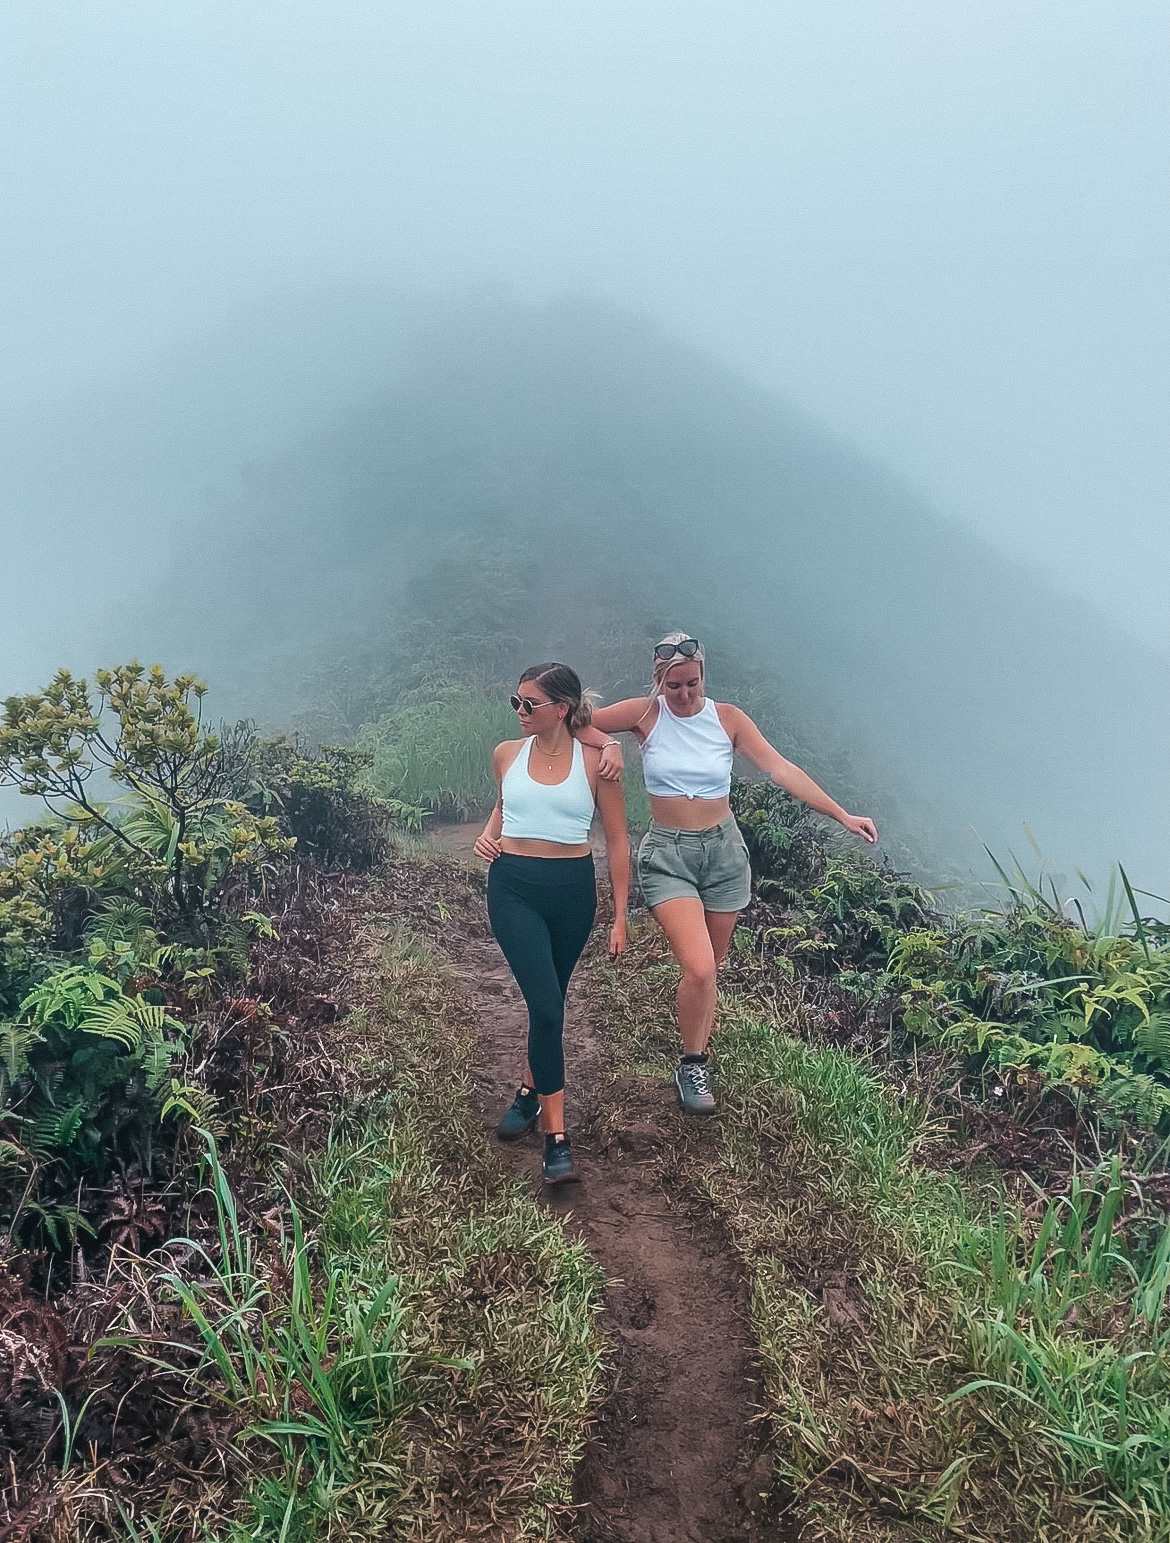 Girlfriends doing Wiliwilinui ridge hike on a foggy day